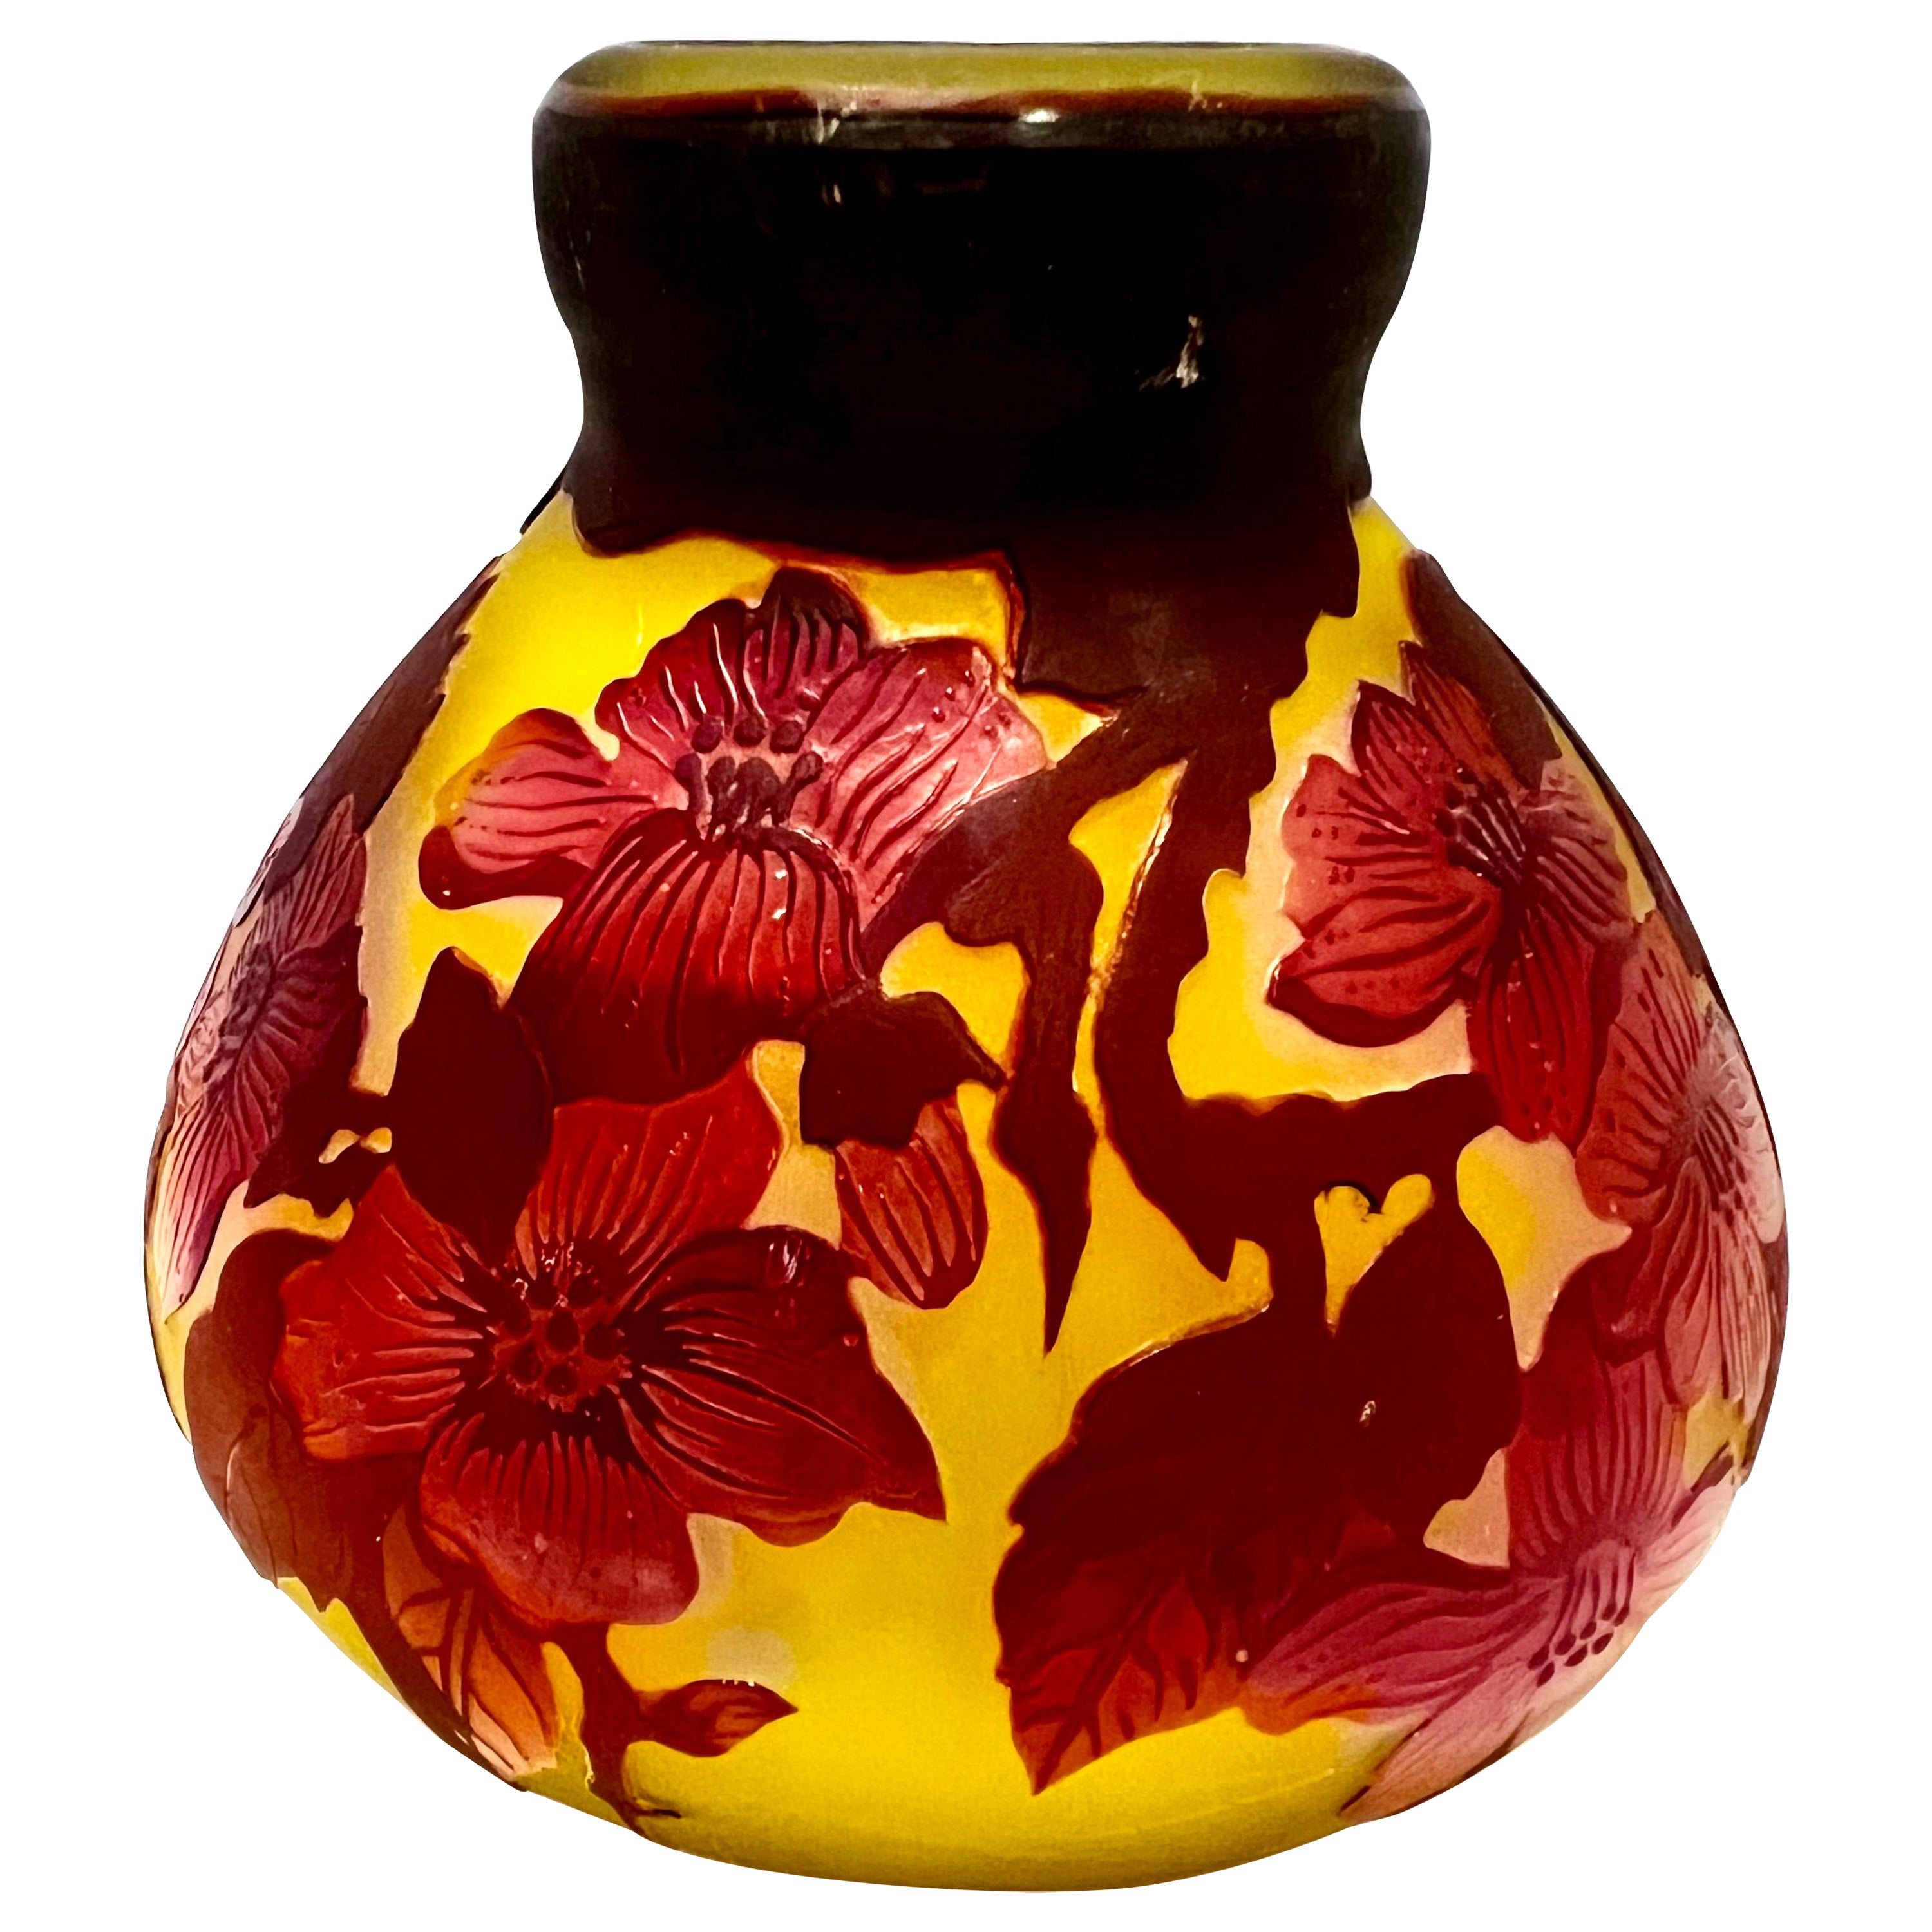 Emile Galle Cameo Glass Windowpane Floral Art Noveau Vase Vessel